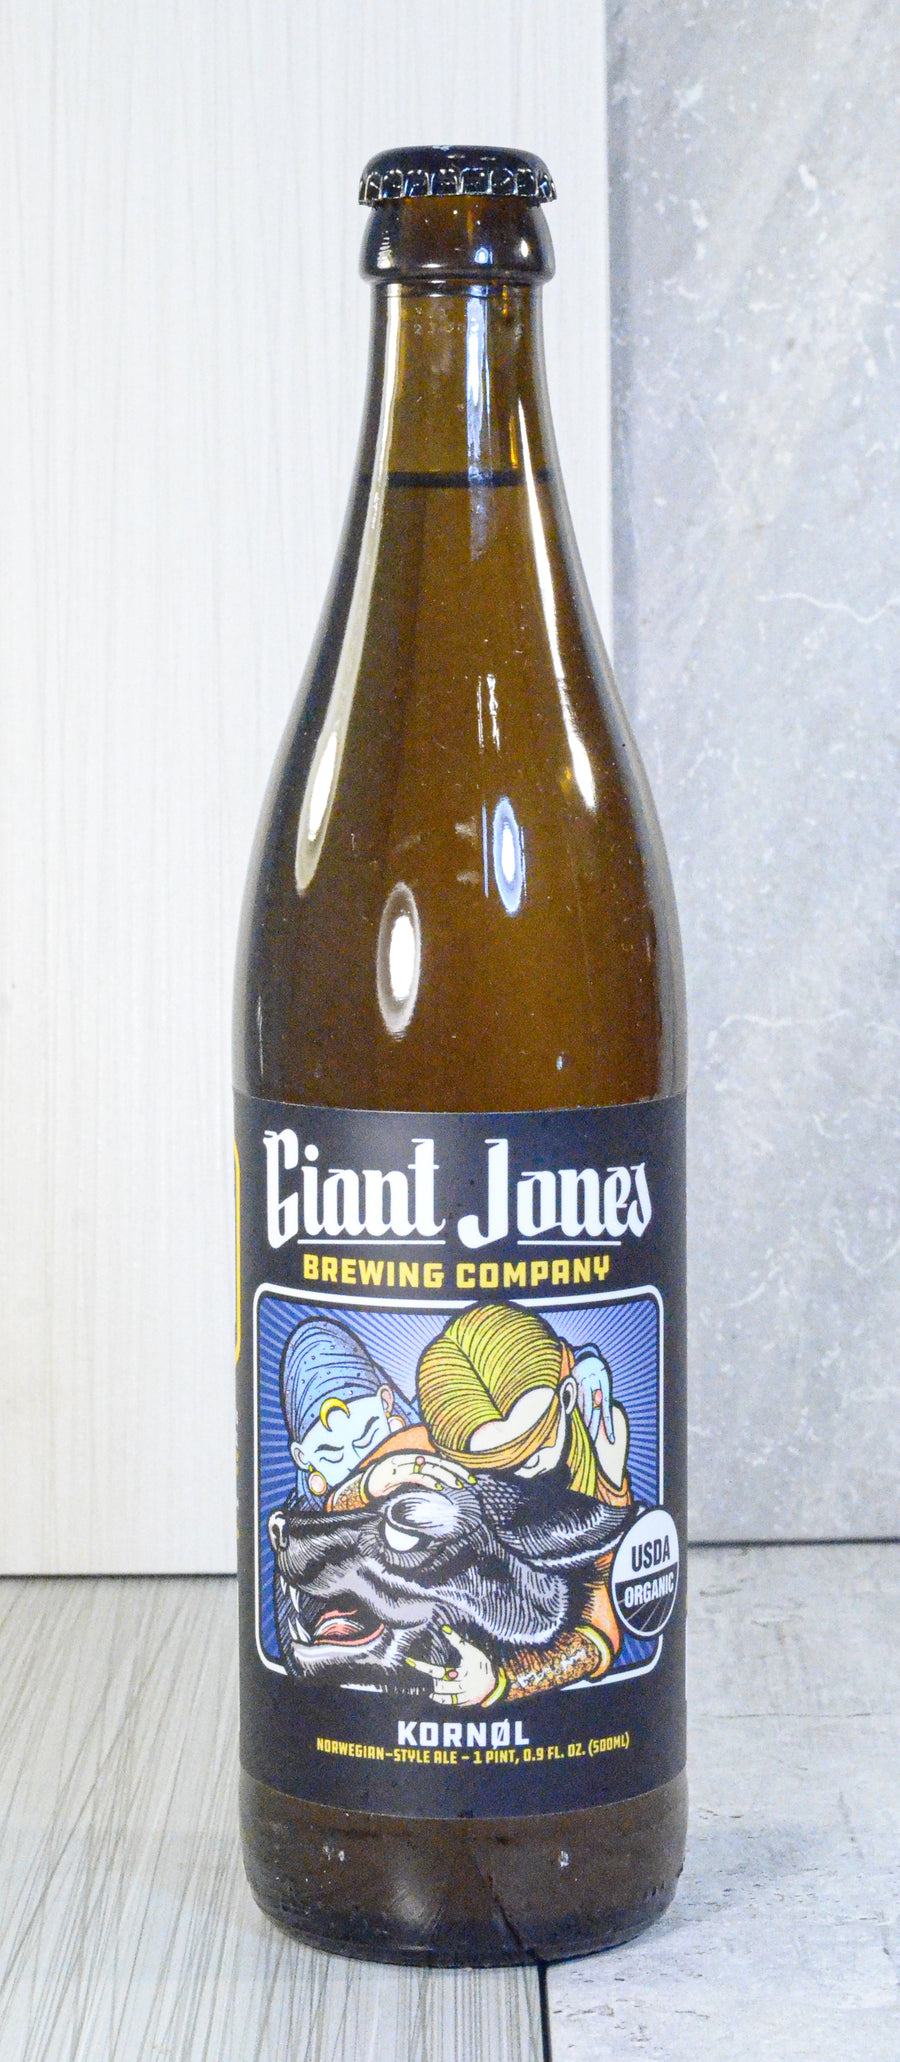 Giant Jones Brewing, Kornol Norwegian-Style Ale